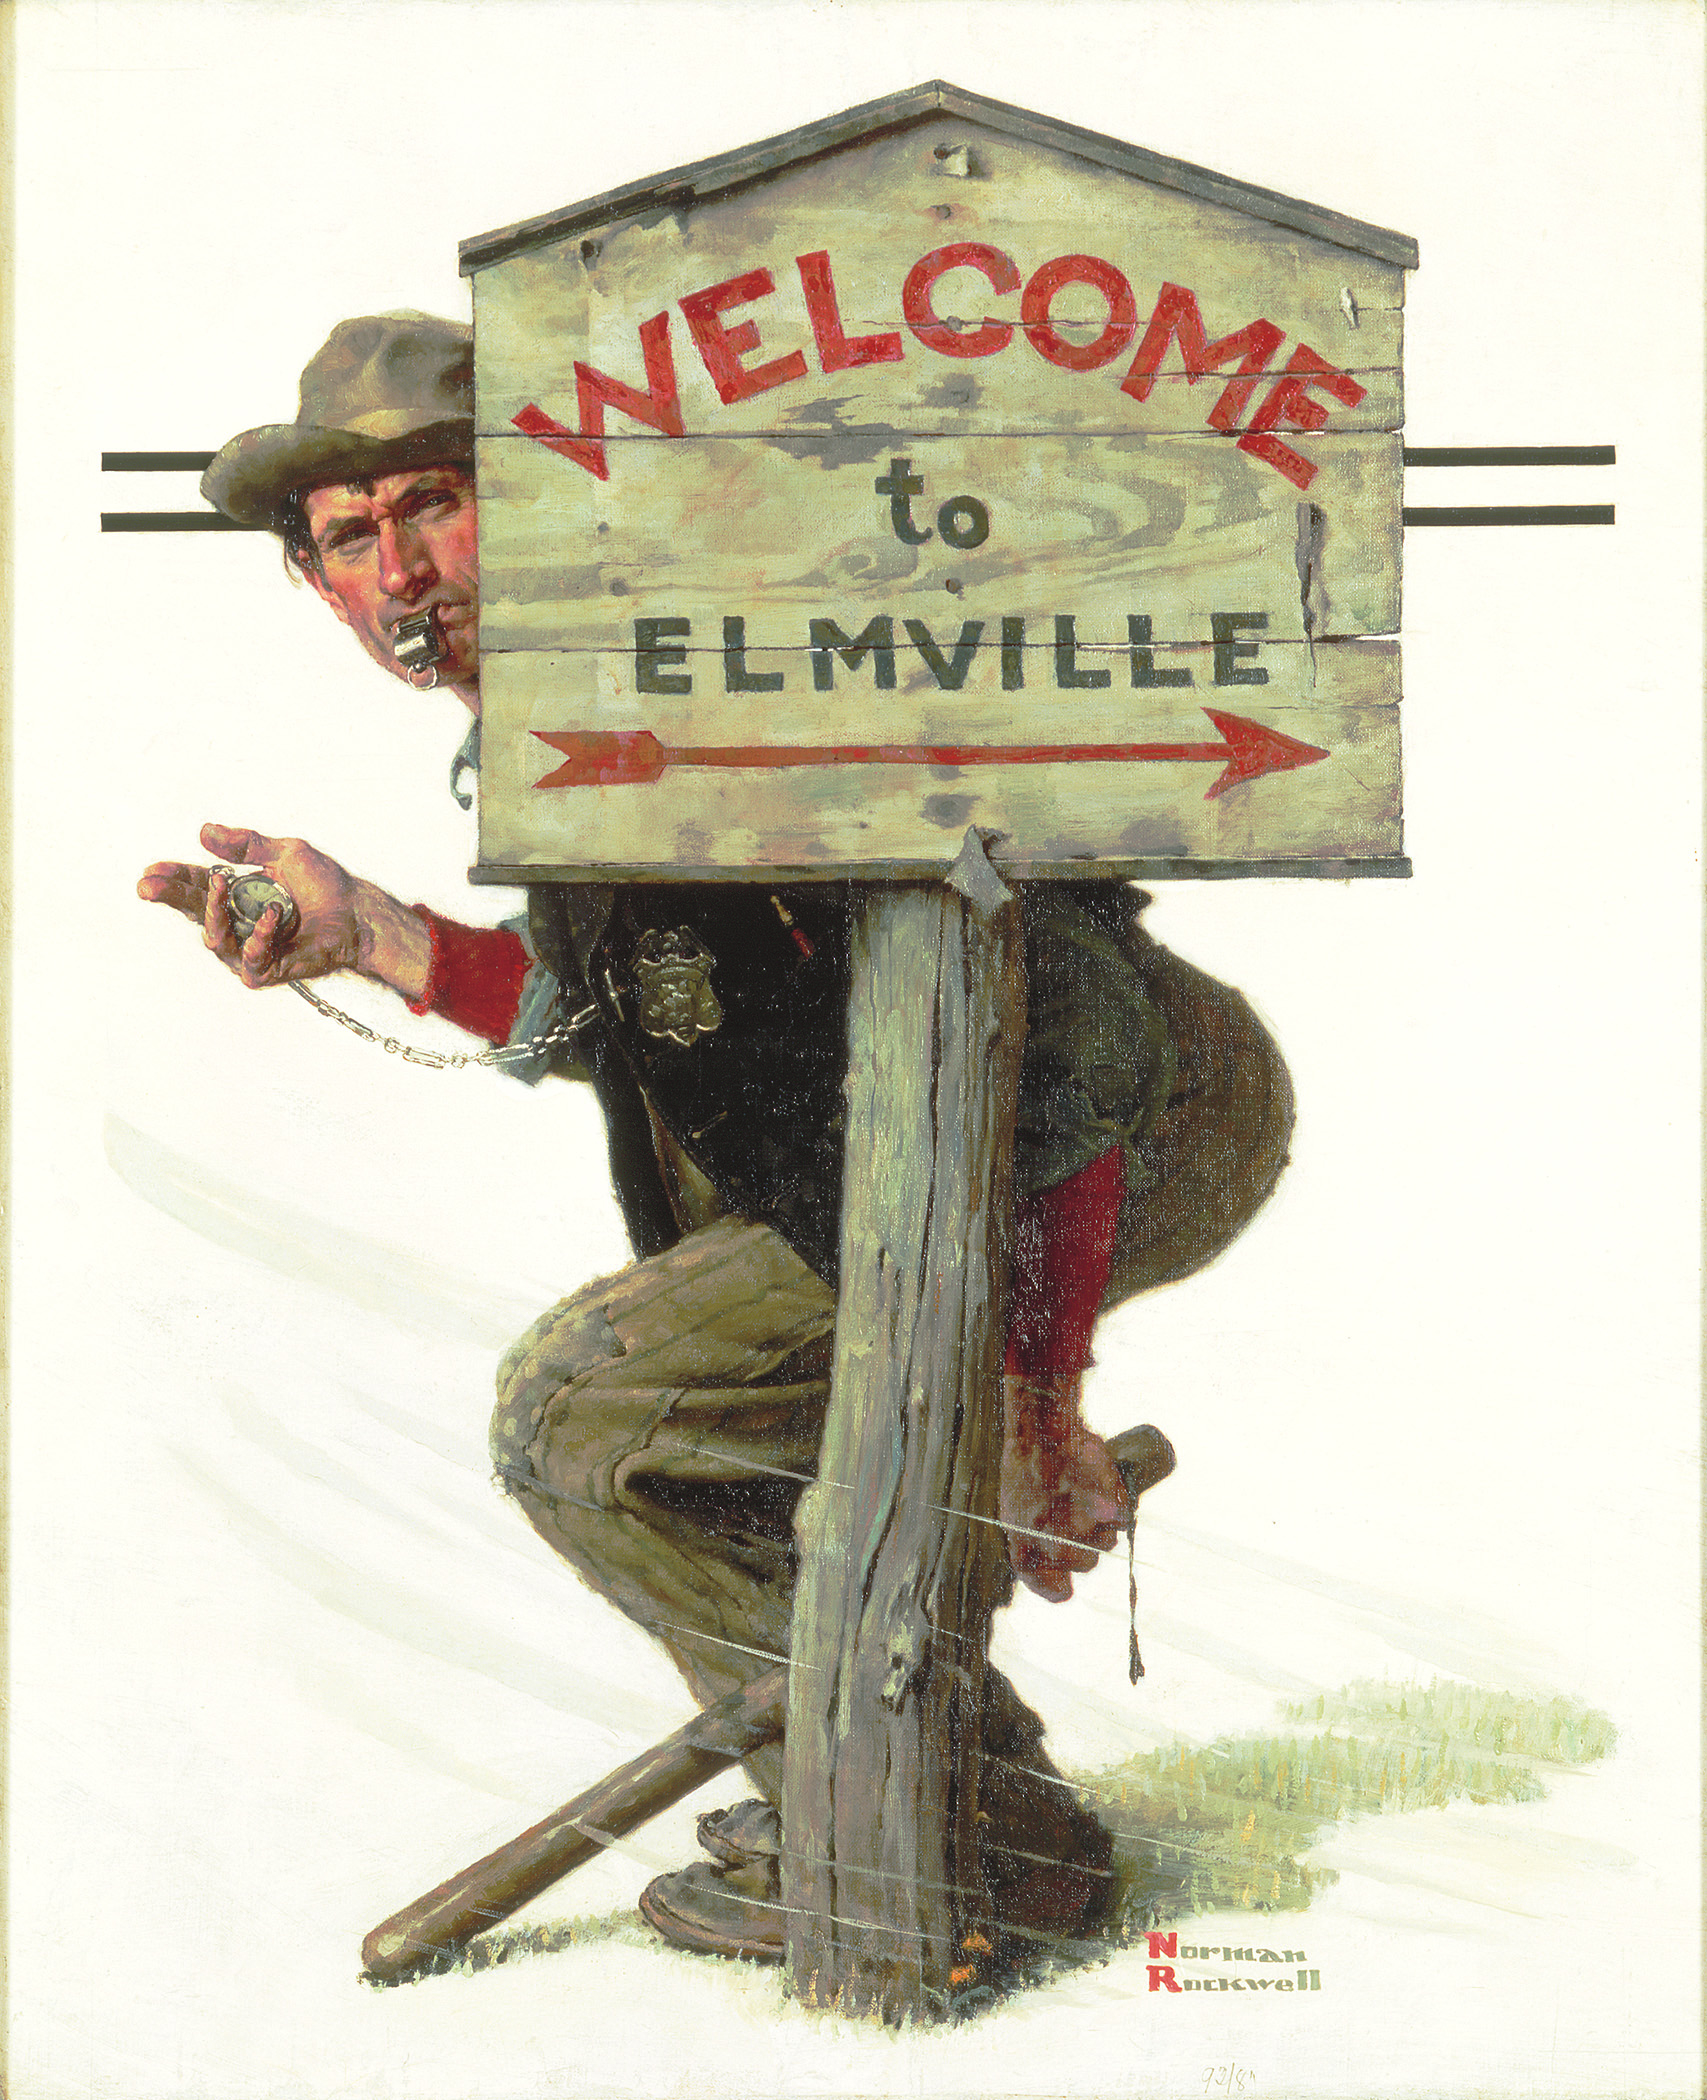 Norman Rockwell's "Welcome to Elmville"